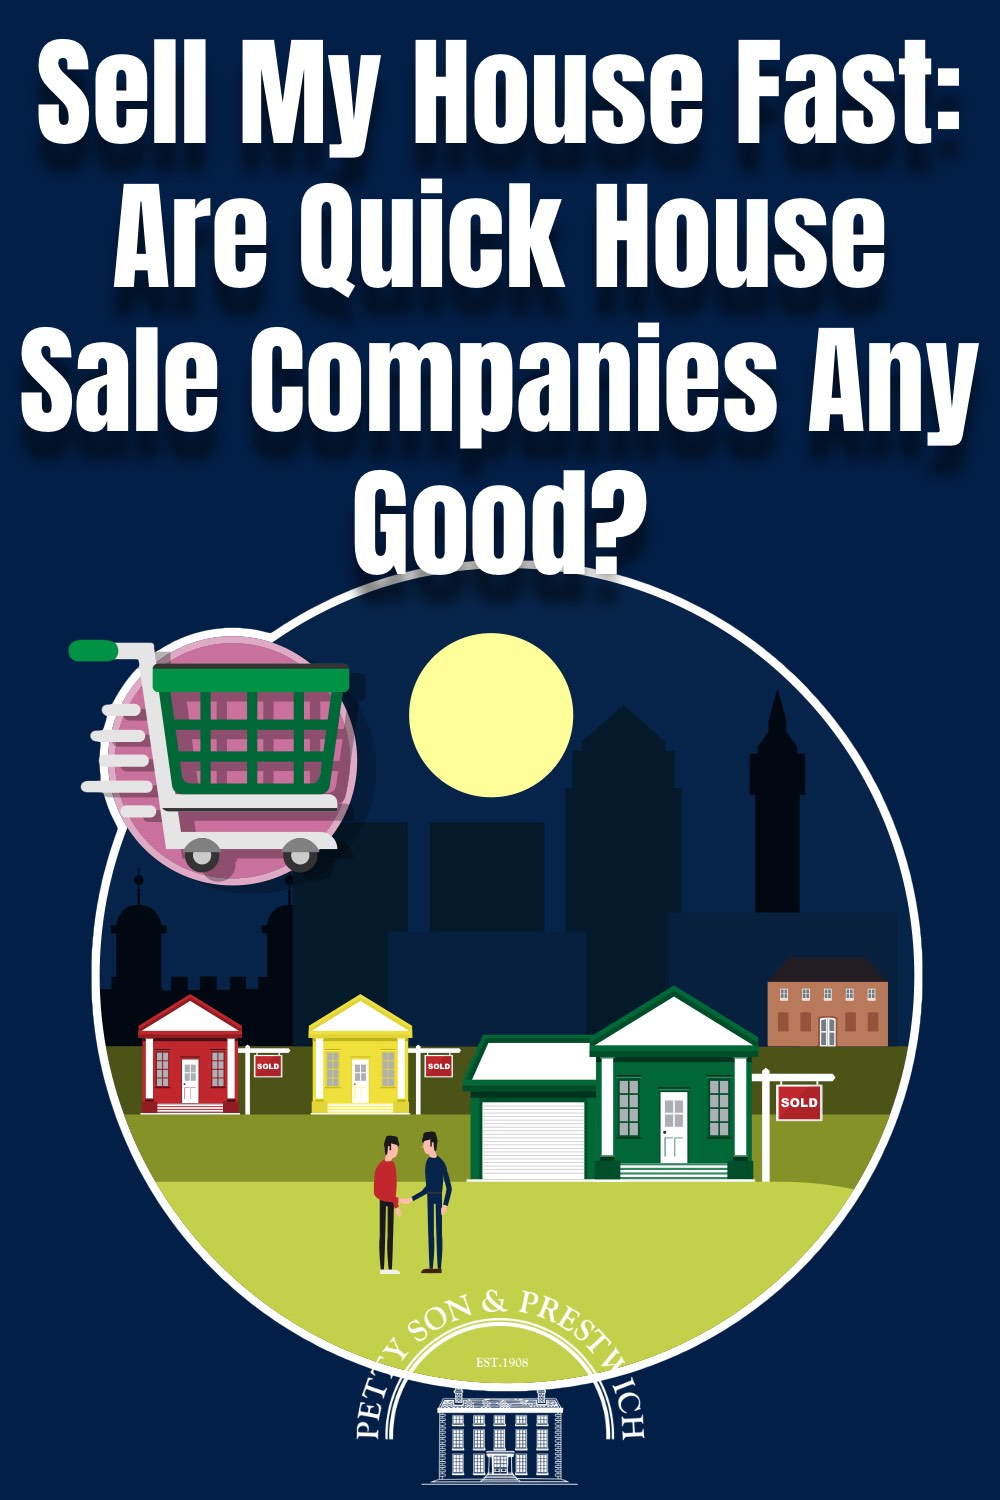 are quick house sales companies legit